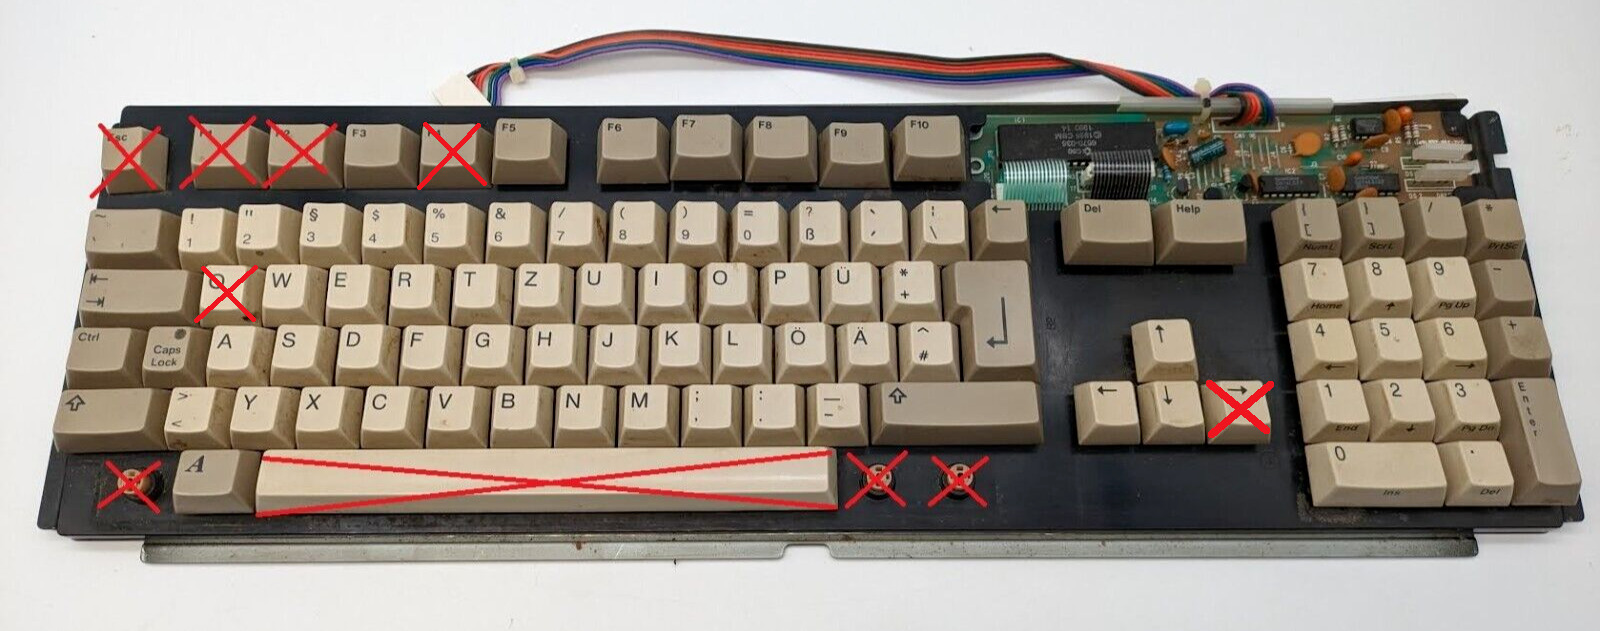 Amiga 500 / 500+ keyboard keys / replacement keys keycaps for Samsung keyboards